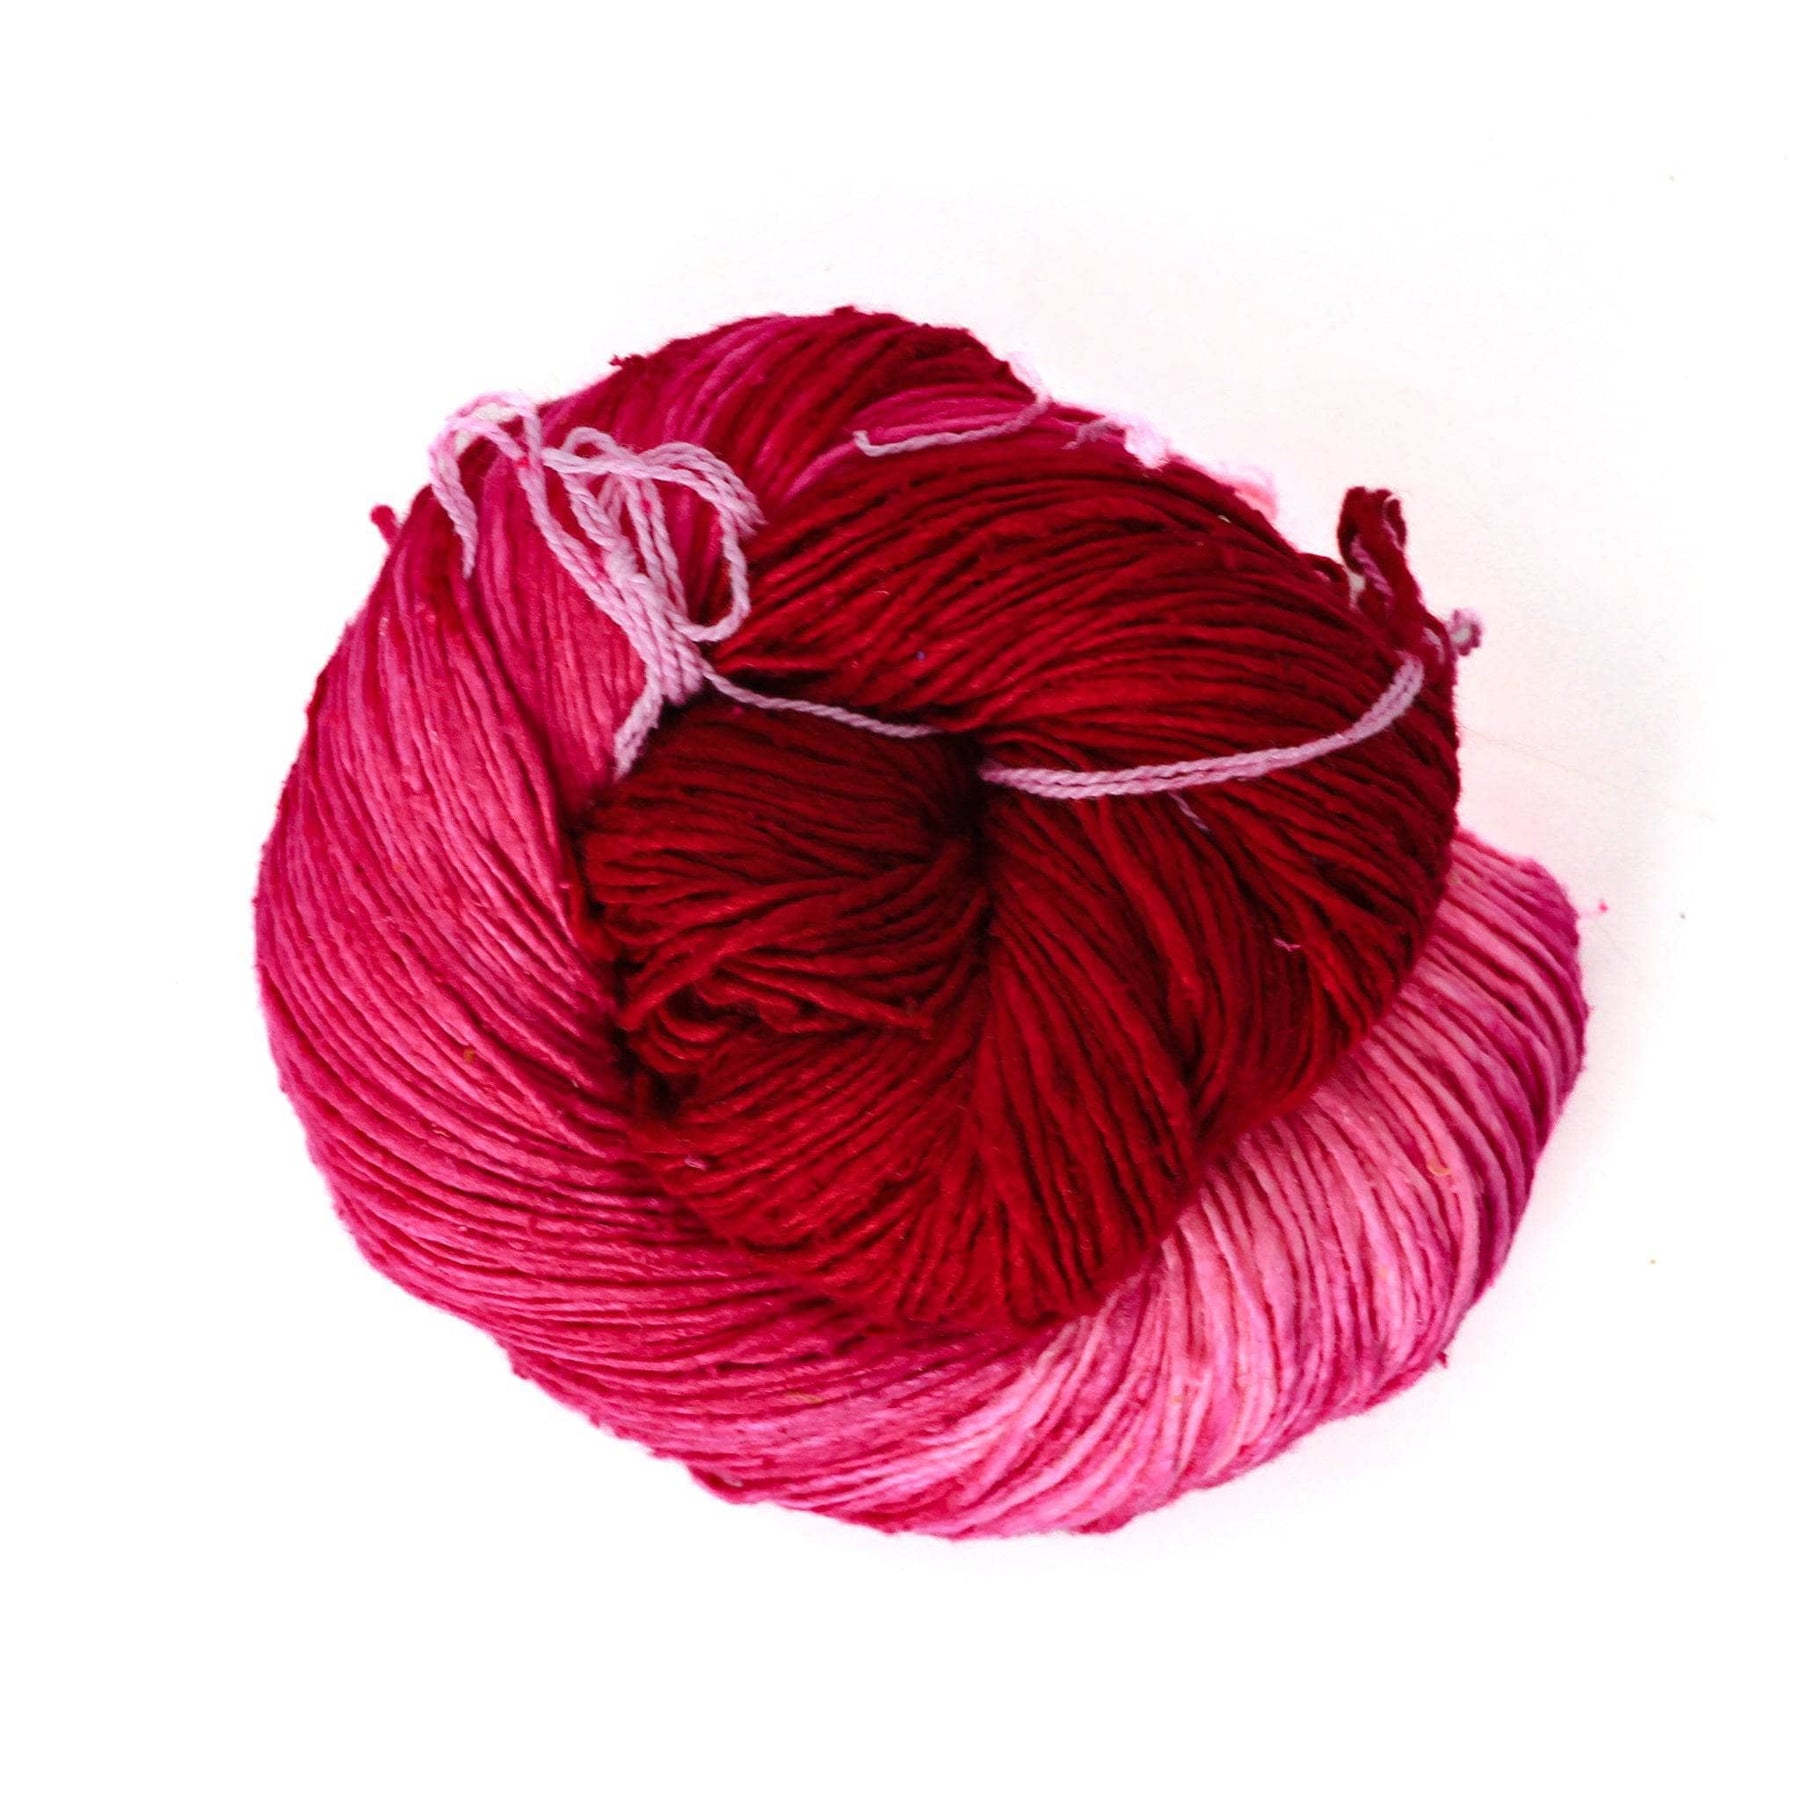 Ombre Recycled Silk Yarn  Recycled Ombre Yarn – Darn Good Yarn